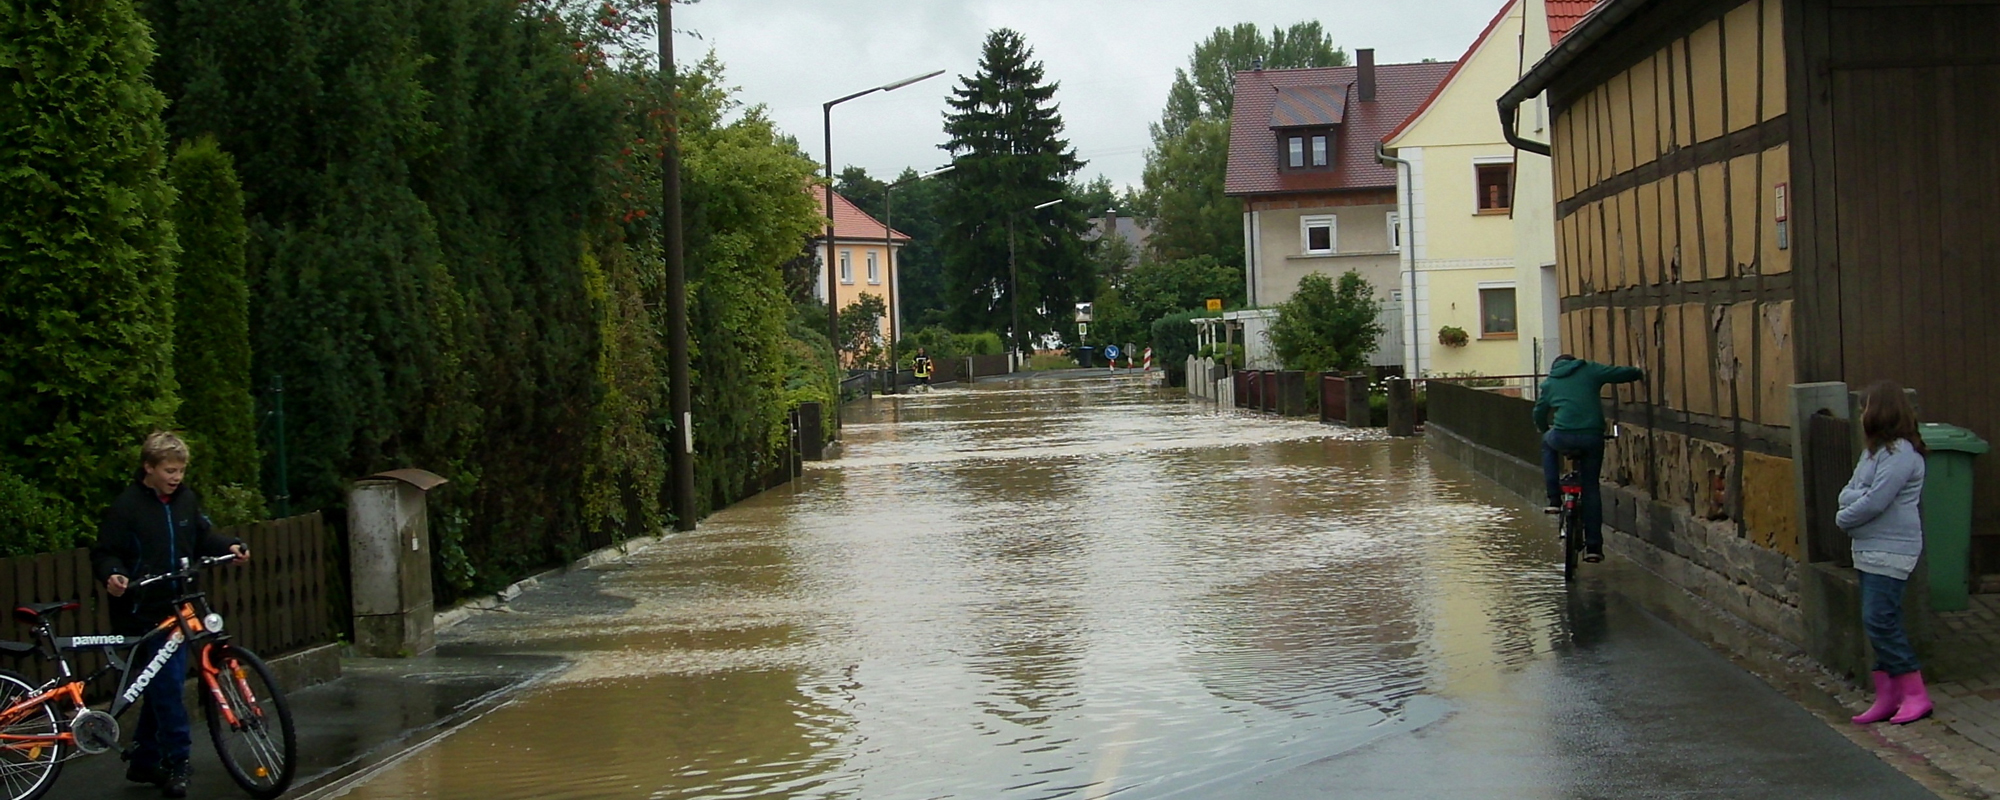 Flood water risk planning